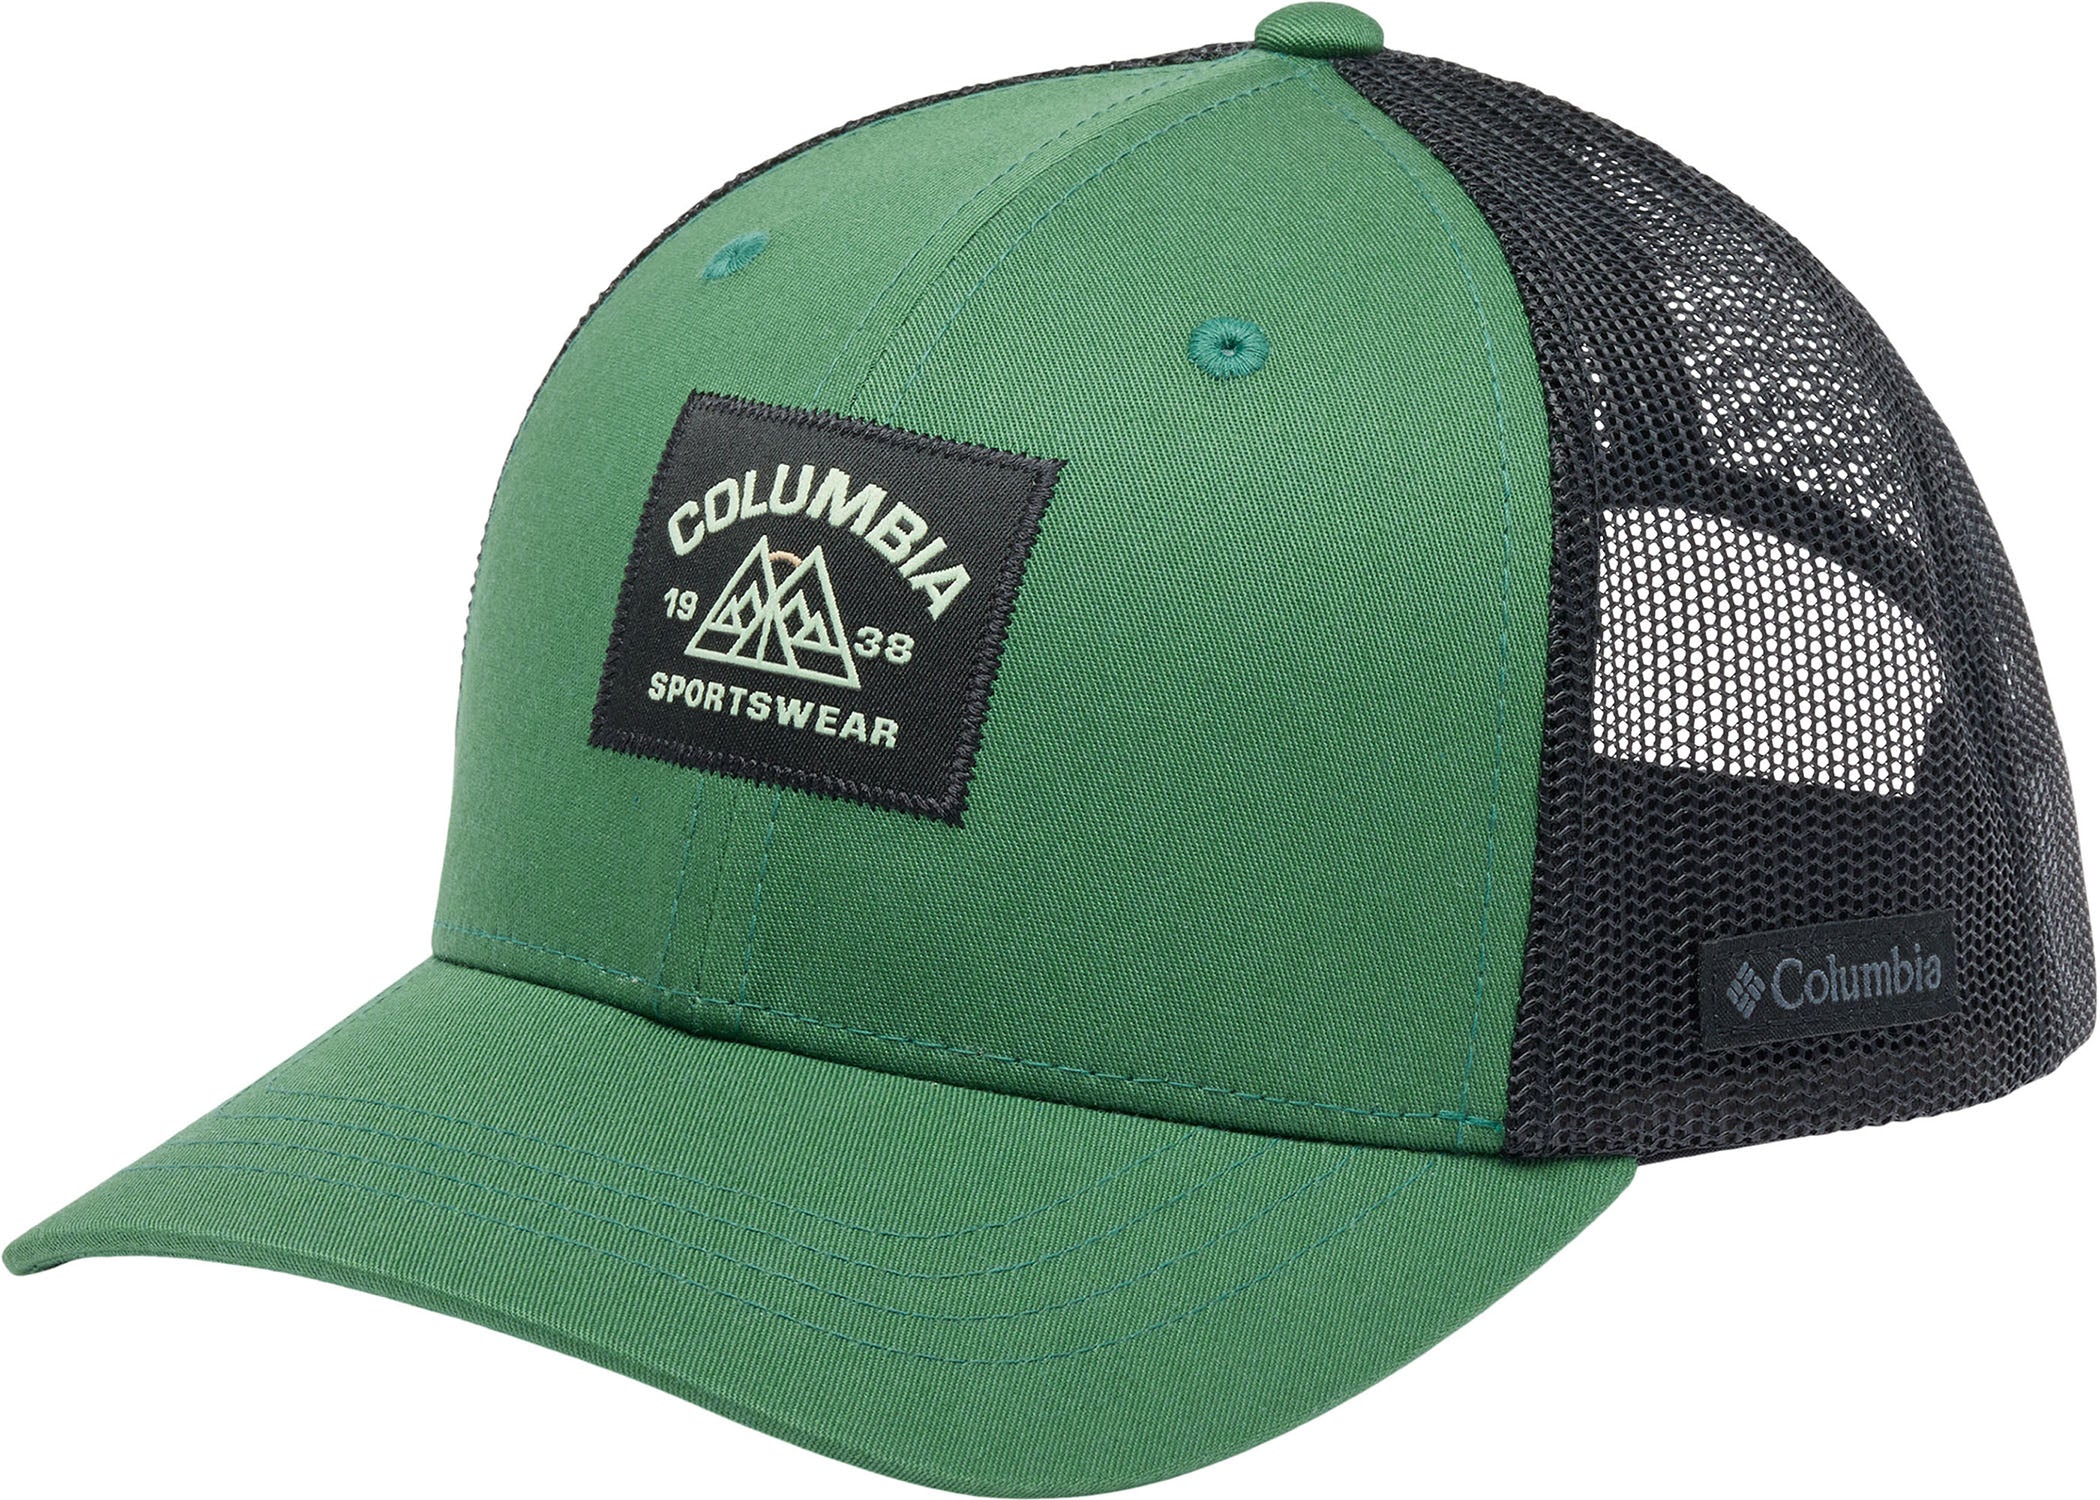 Columbia - Youth Snap Back Jr - Junior Adjustable Cap